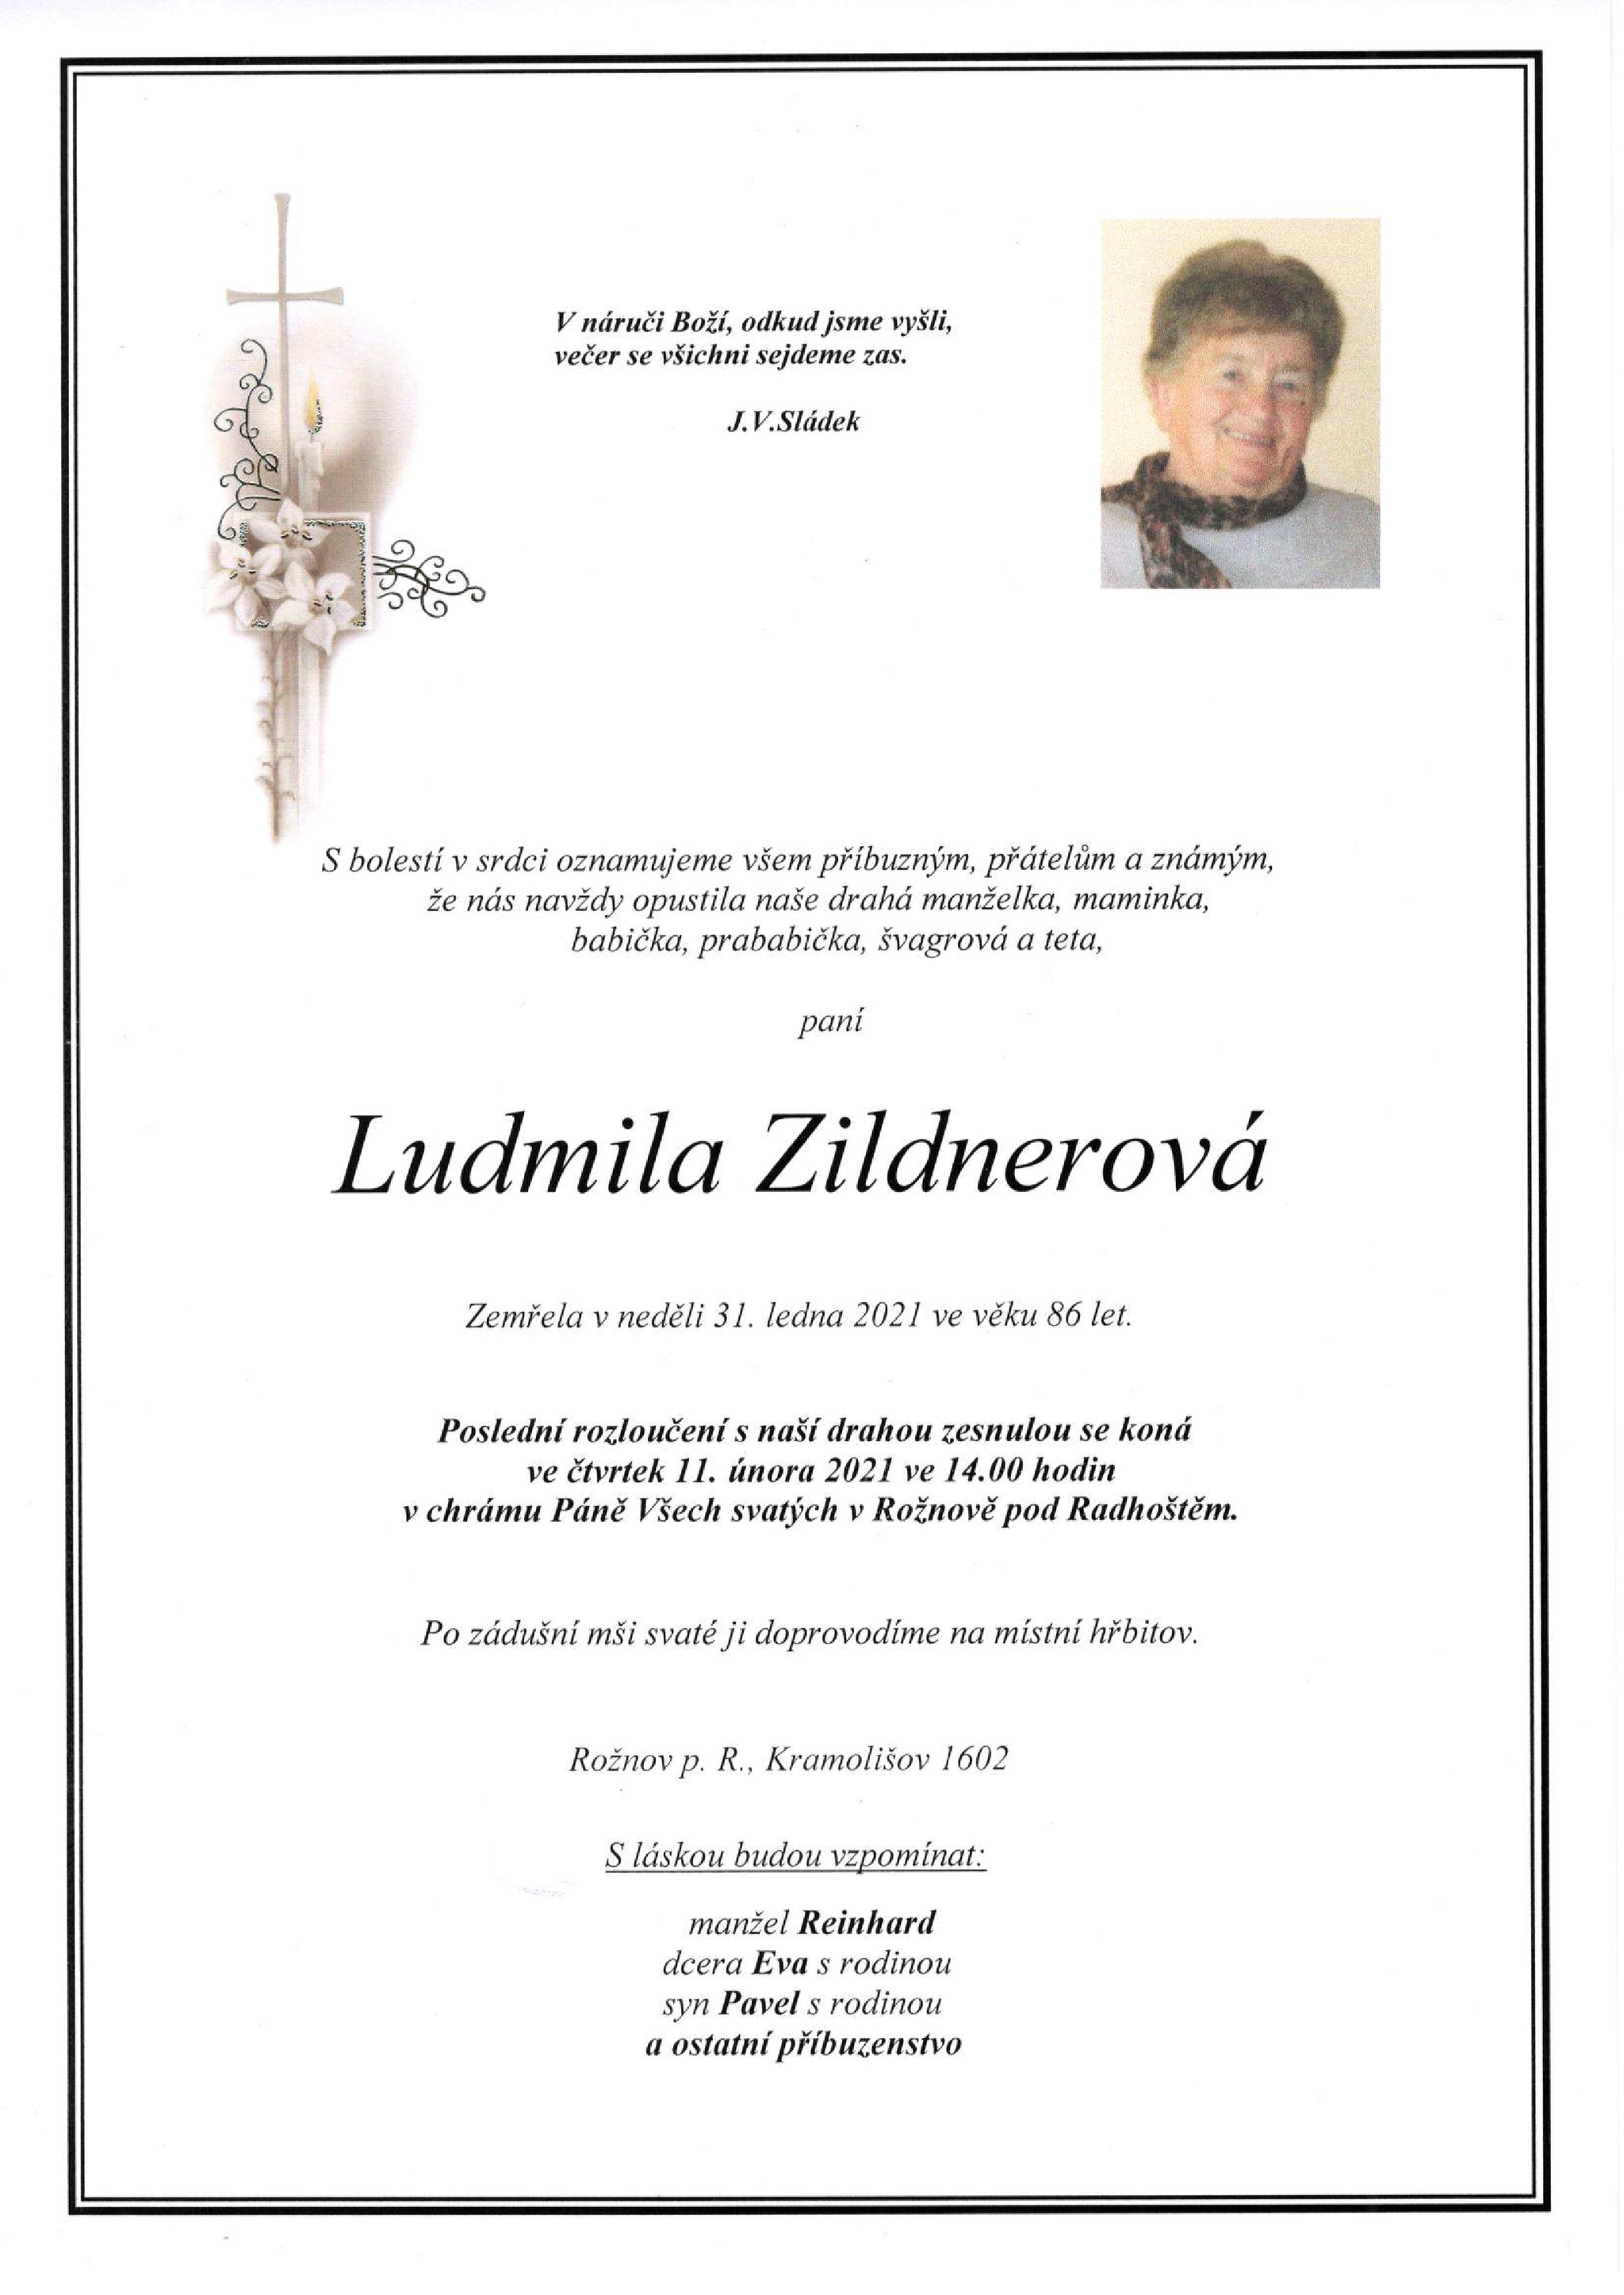 Ludmila Zildnerová